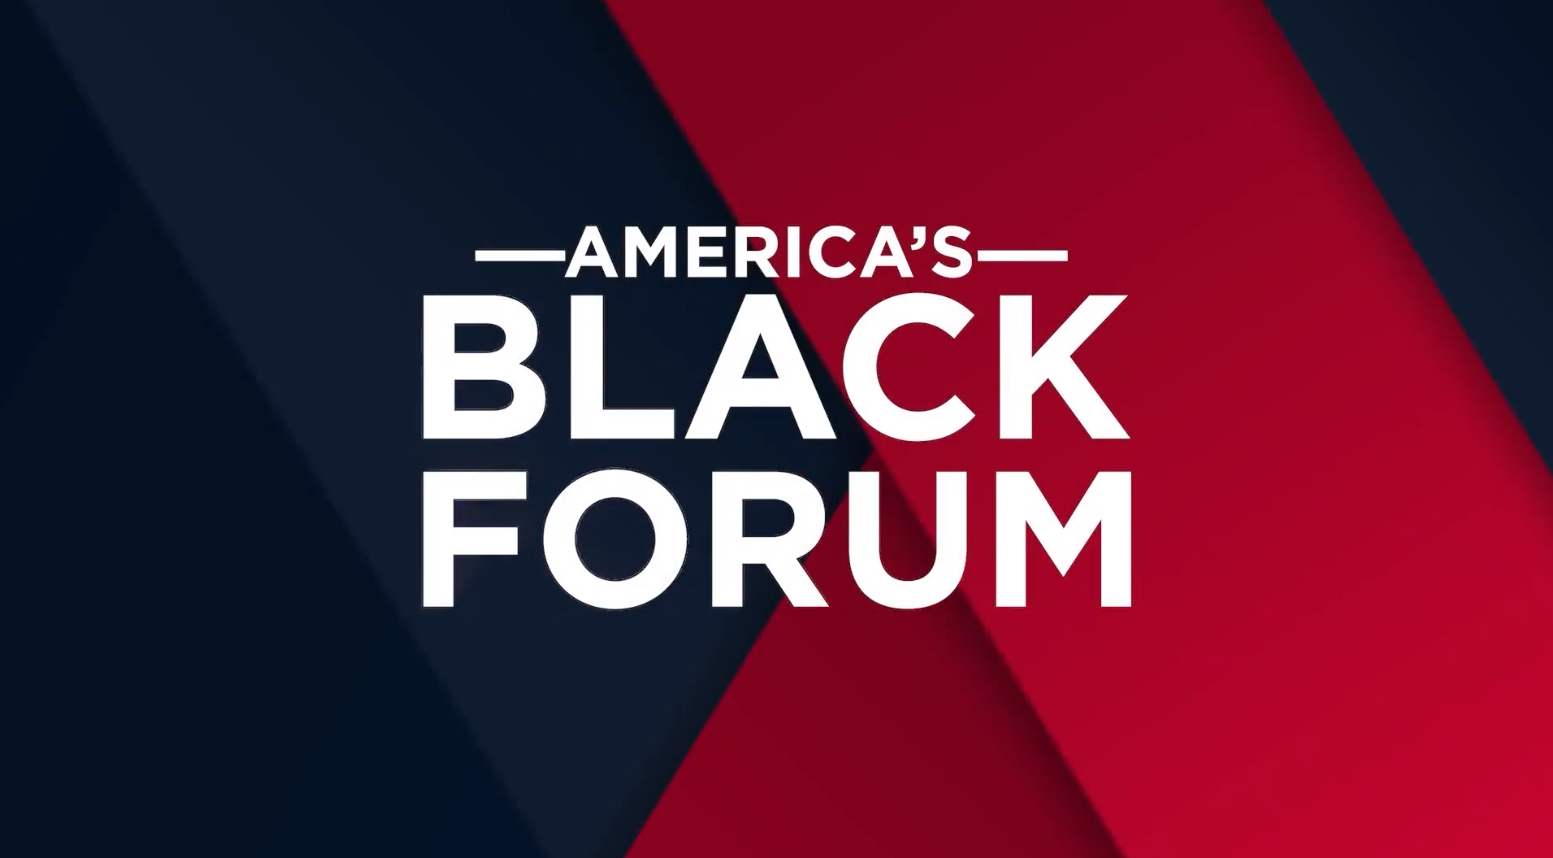 Michael Marshall Interviewed for America’s Black Forum